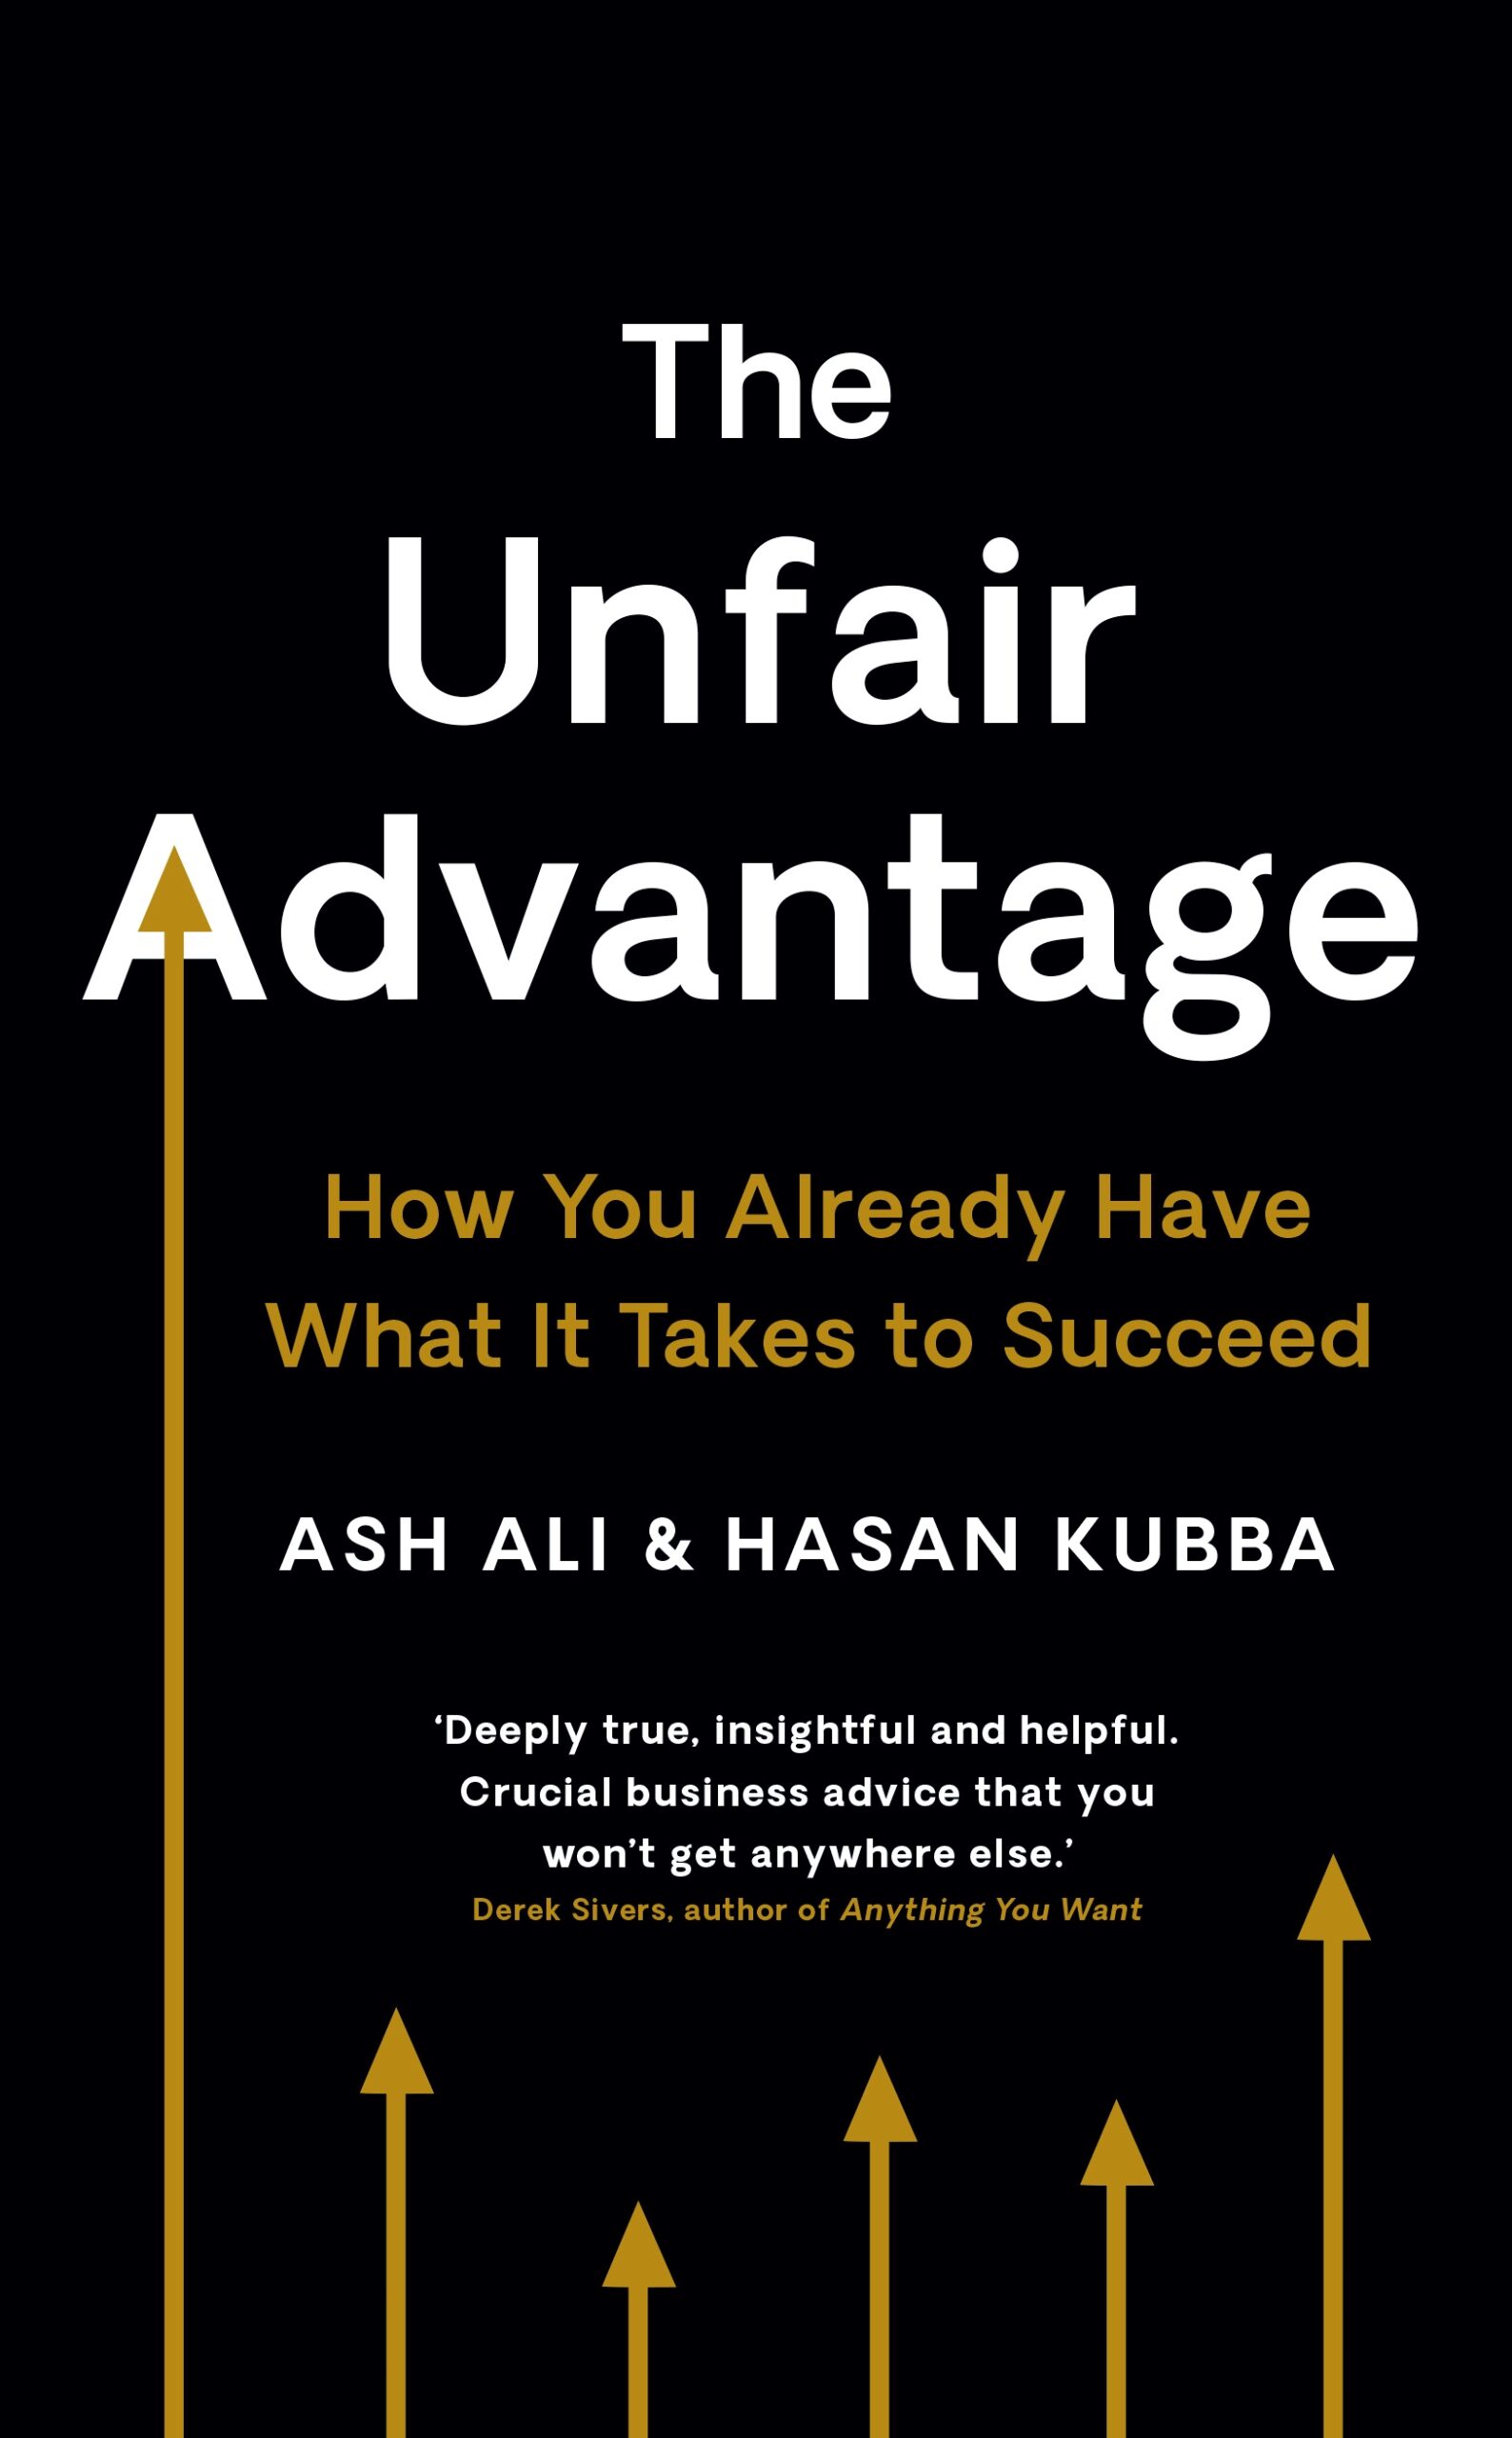 The Unfair Advantage - Ash Ali & Hasan Kubba